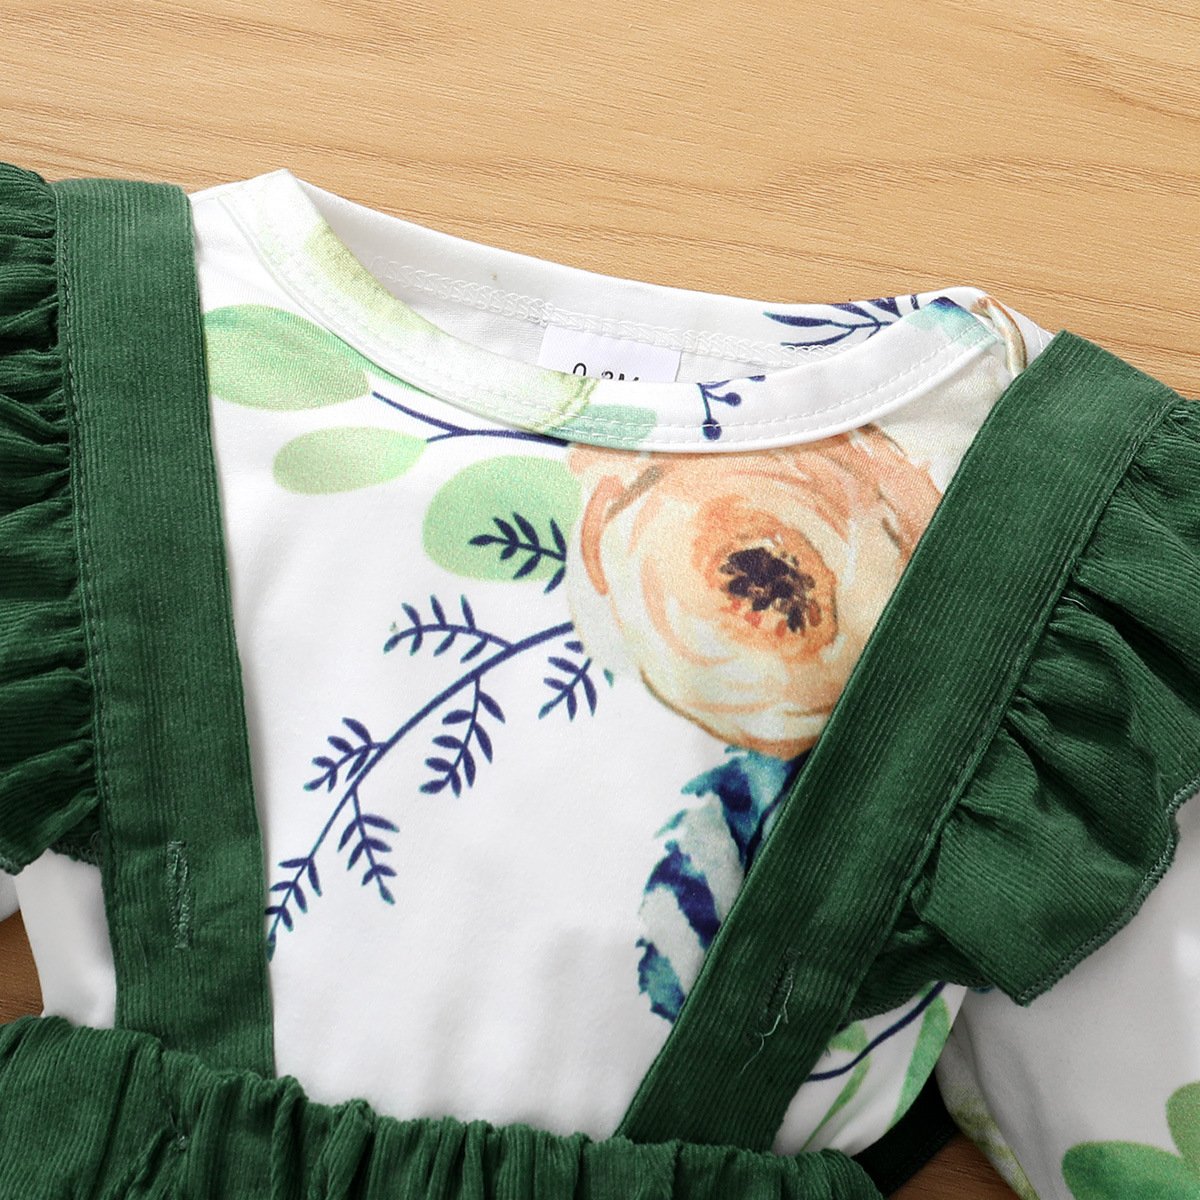 Baby Girls Floral Long Sleeve Romper & Skirt & Headband baby clothing wholesale